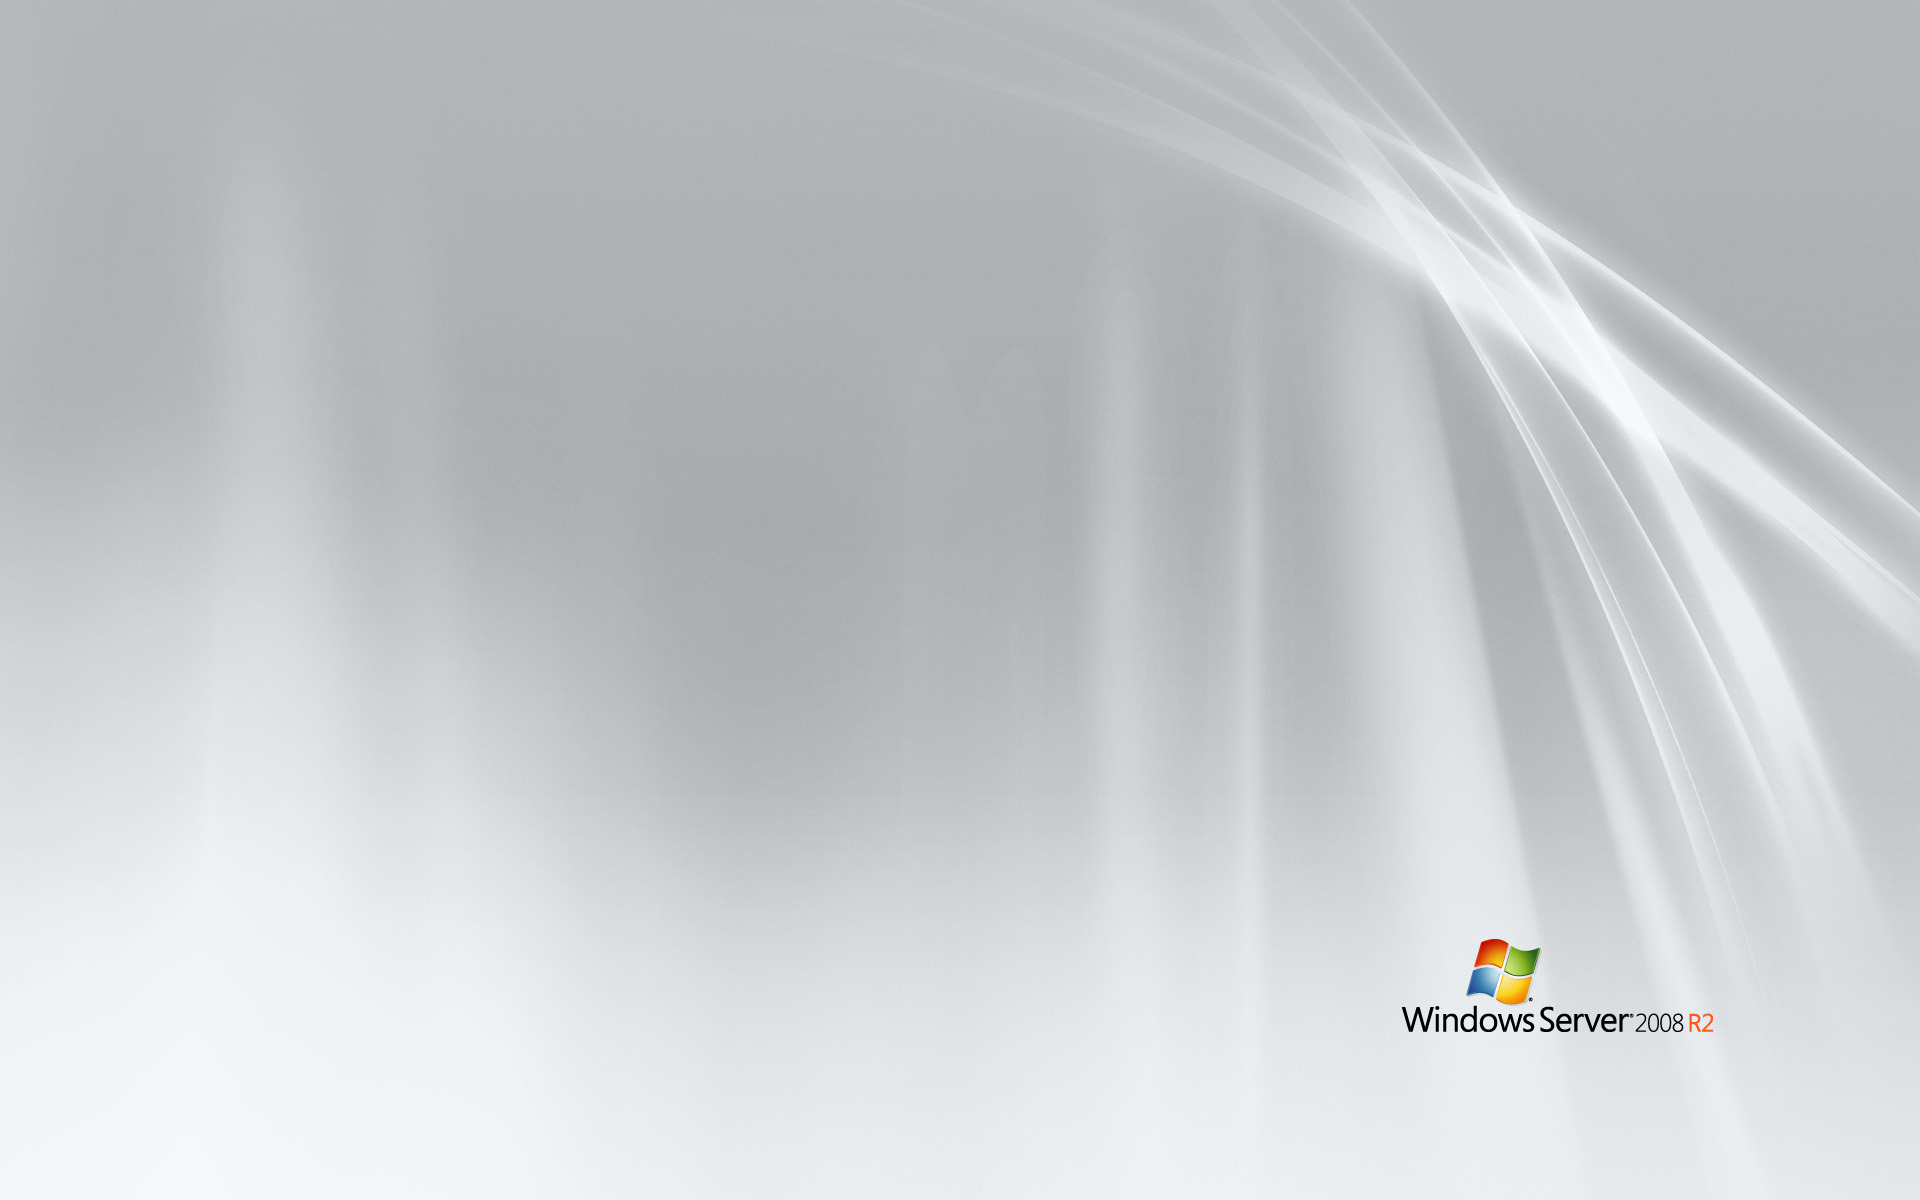 Windows Server 2008 R2 Wallpaper HD by HyperBlueX on DeviantArt